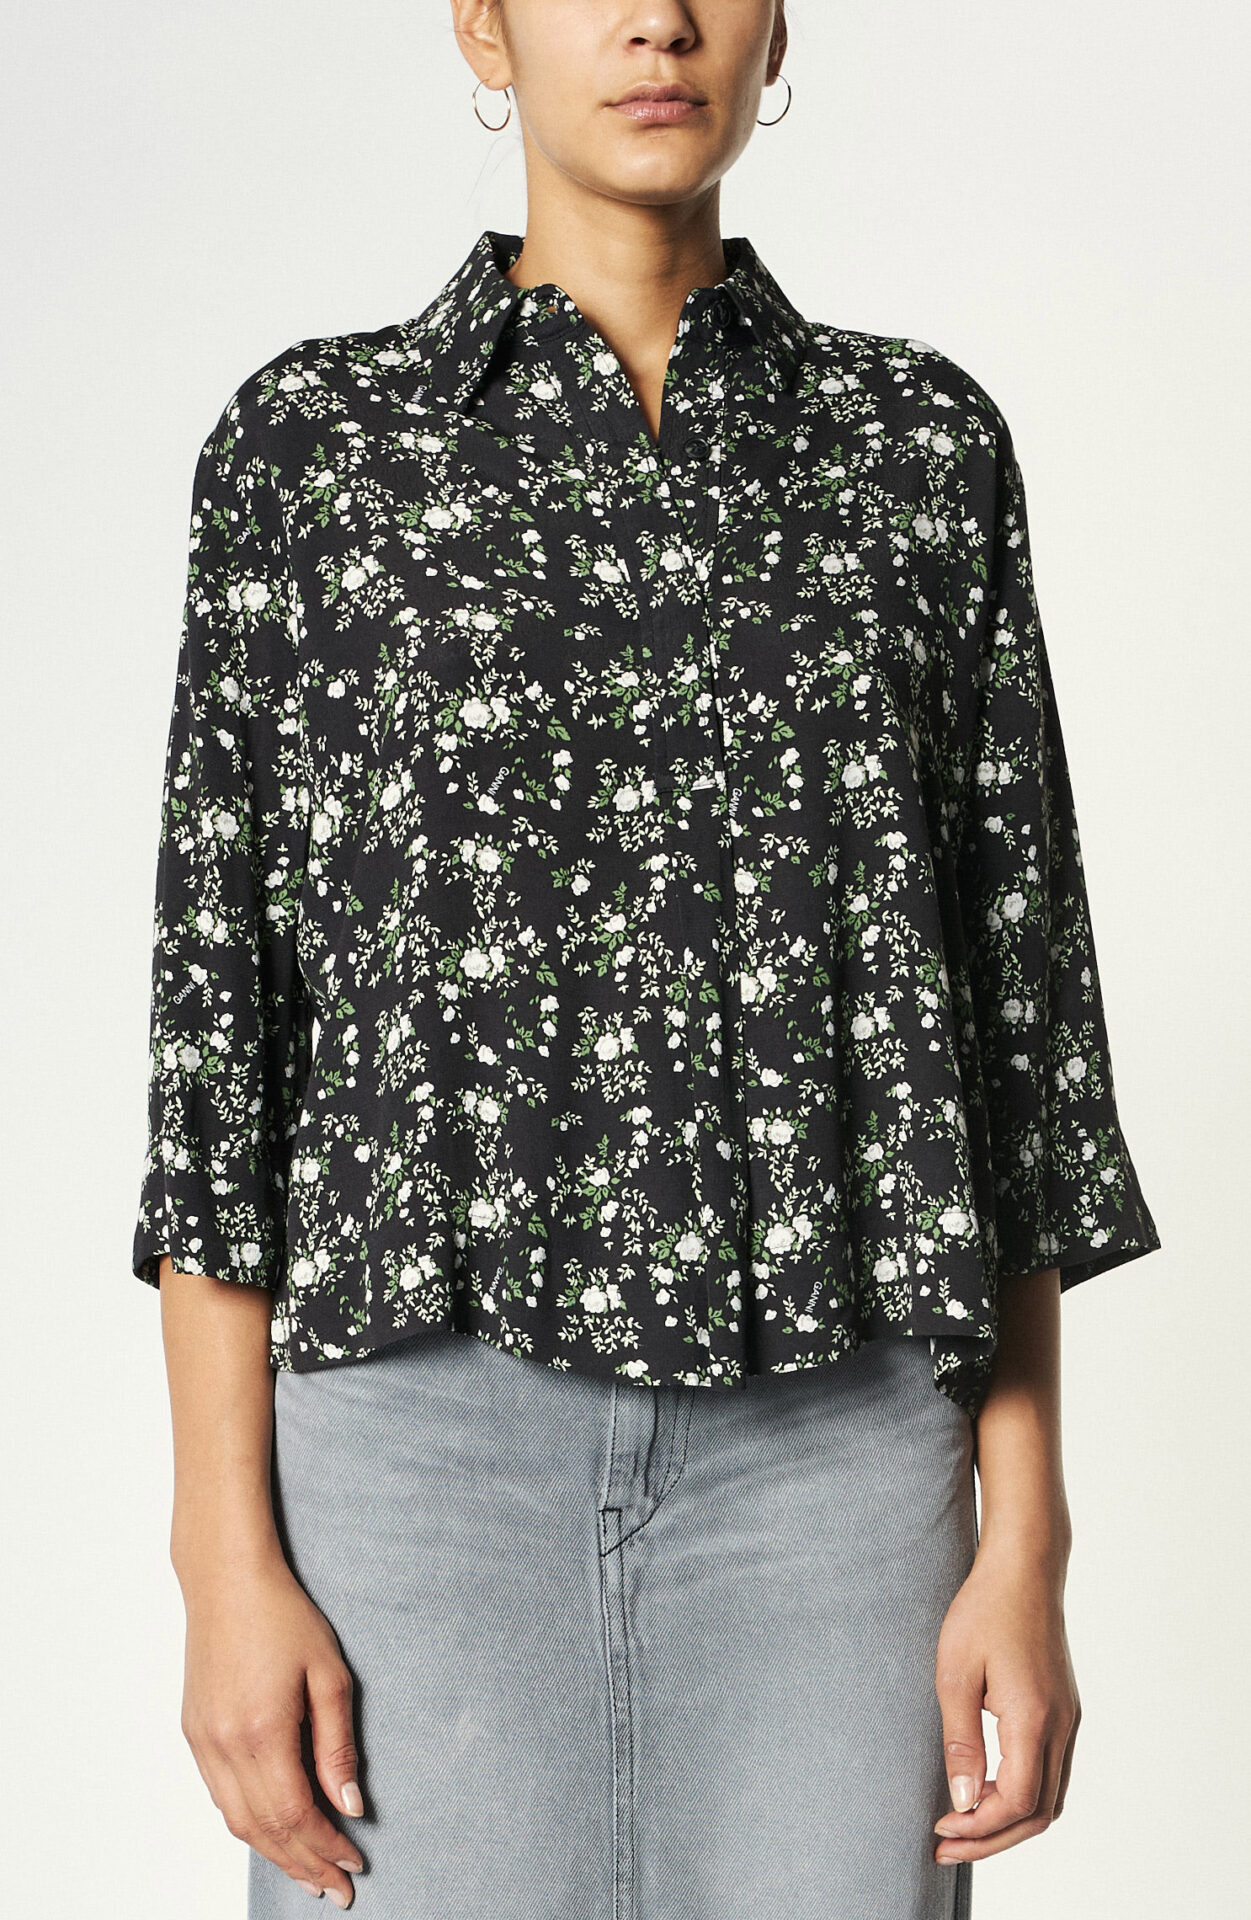 Ganni Black blouse with floral print Schwittenberg